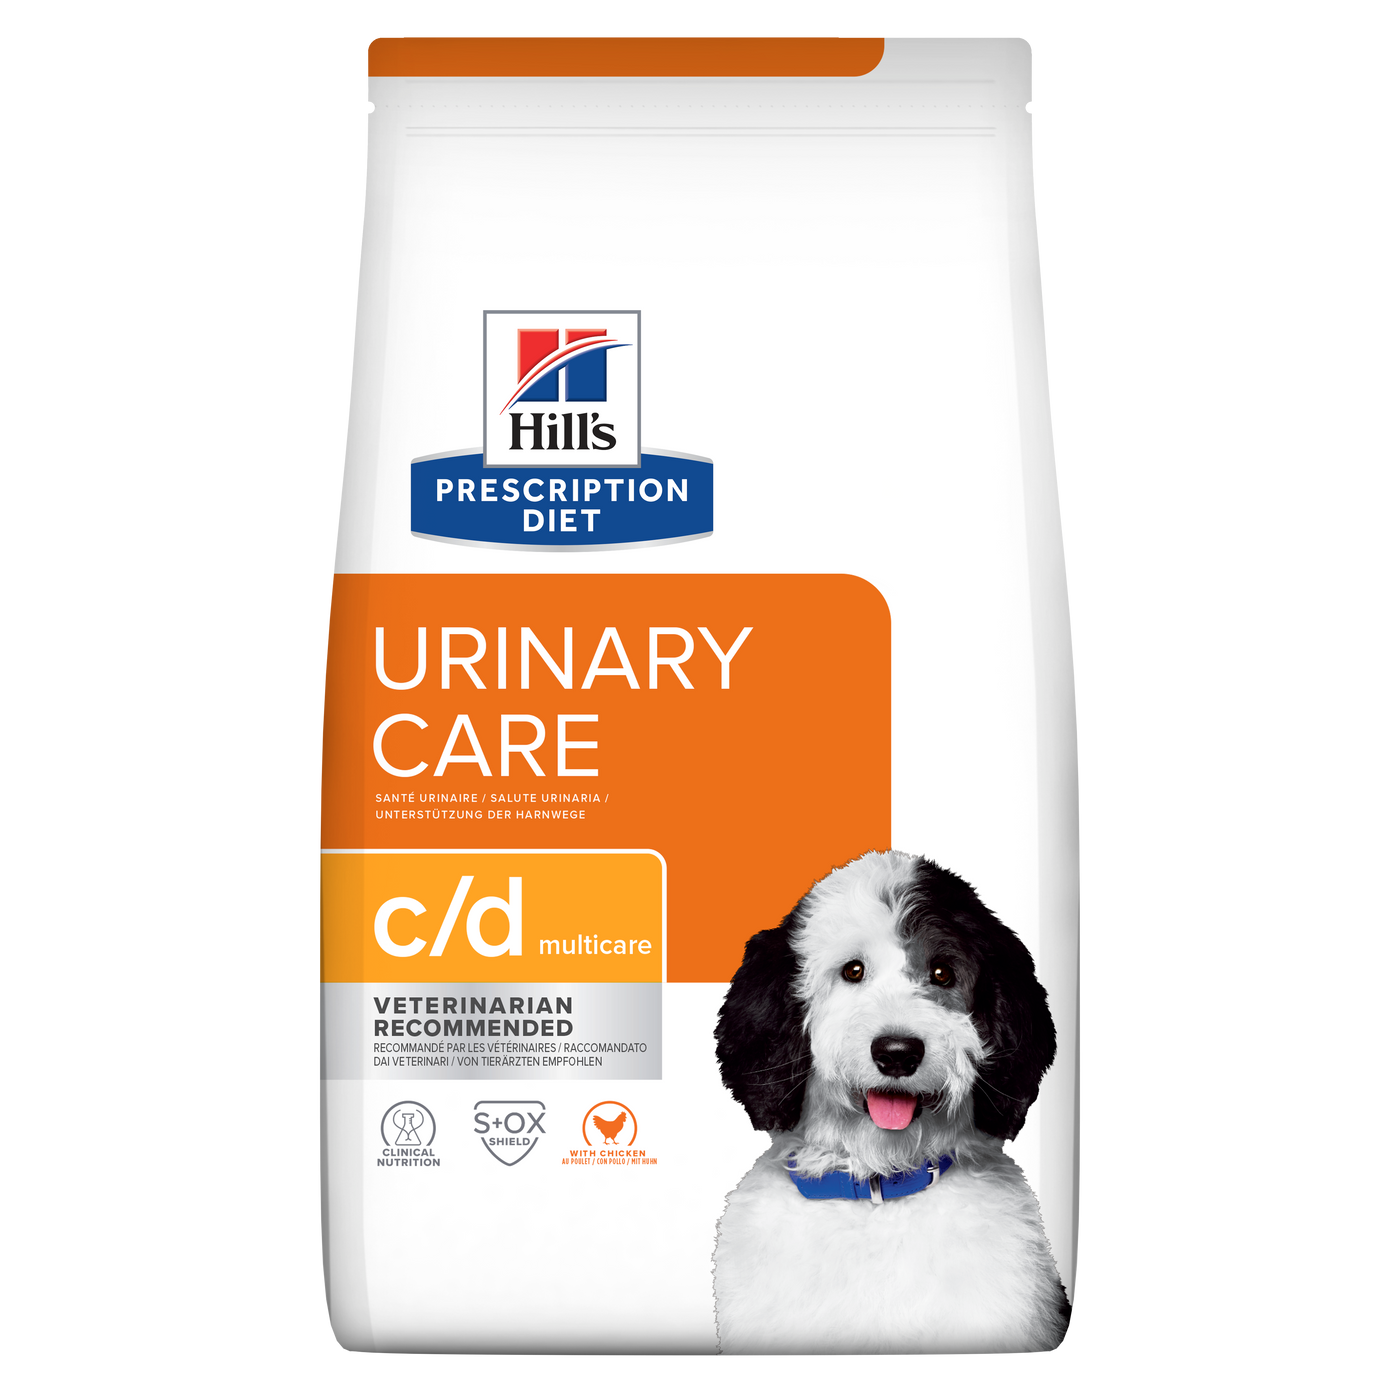 Hill's 希爾思處方食品 - c/d 犬用泌尿道護理配方